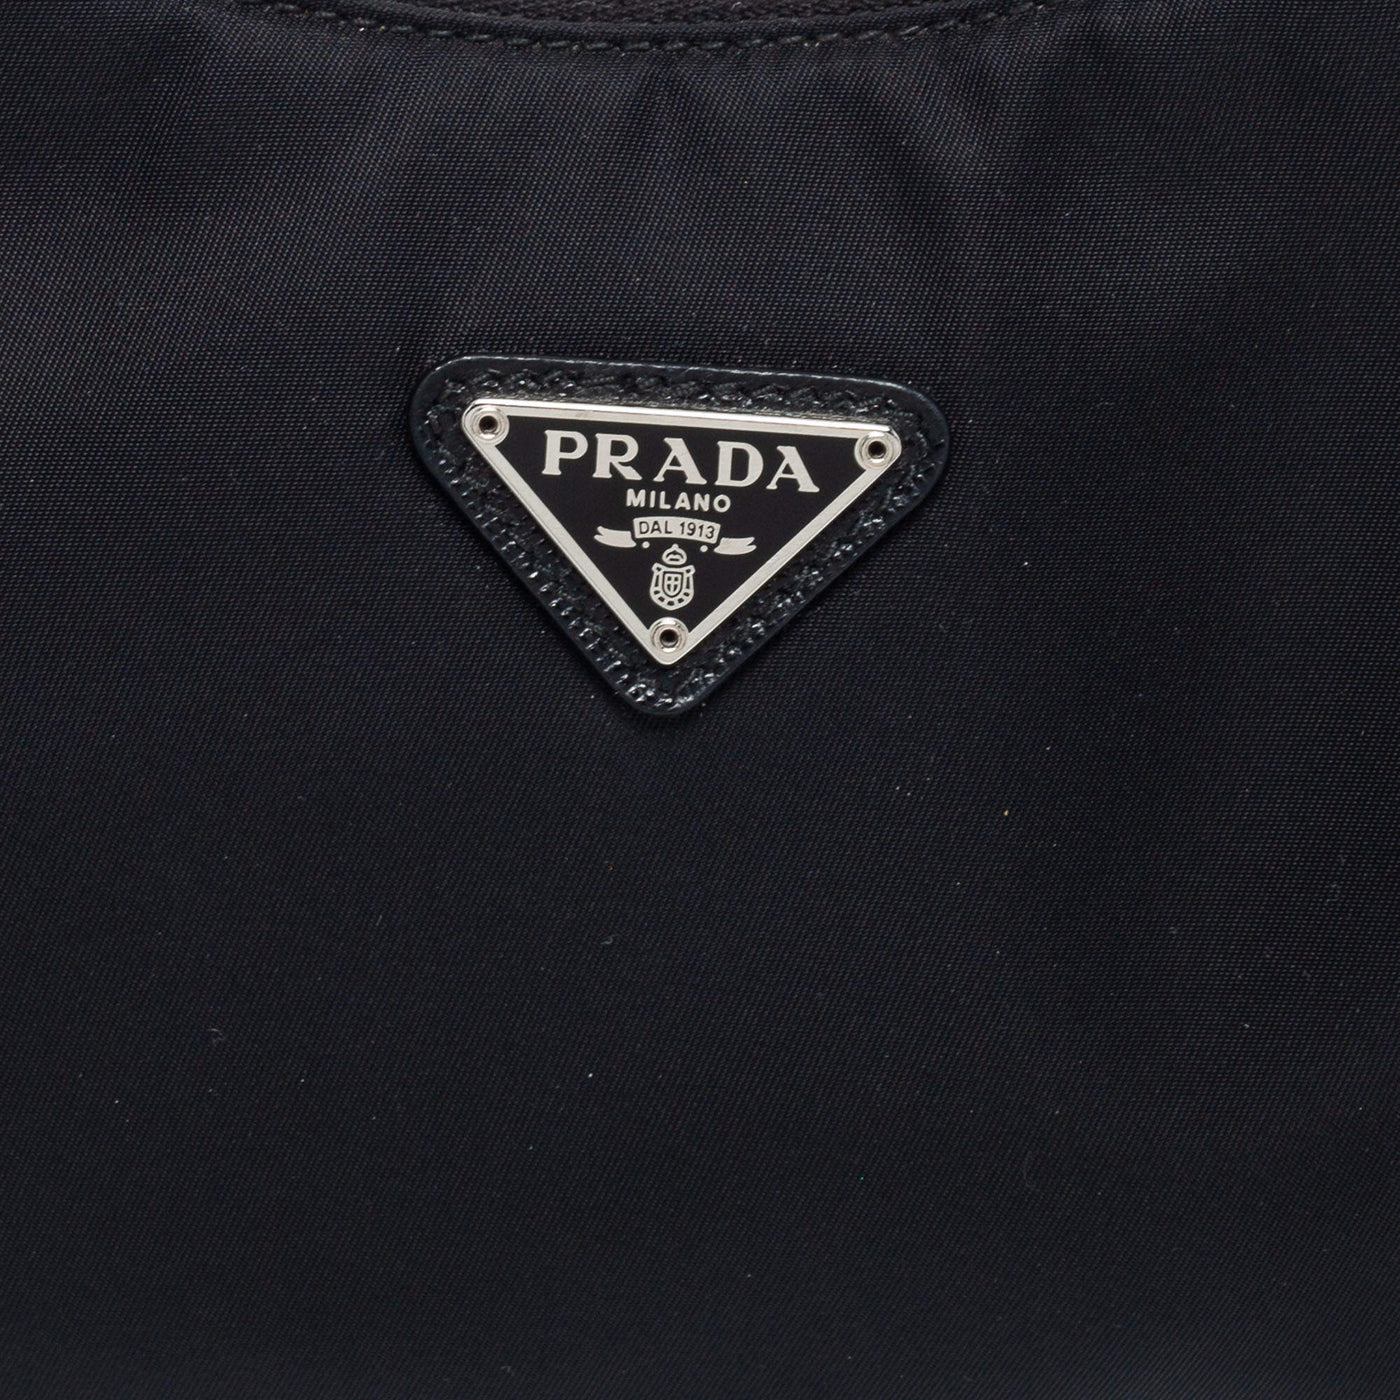 Prada Black Tessuto Nylon Mini Re-Edition 2005 Baguette Bag